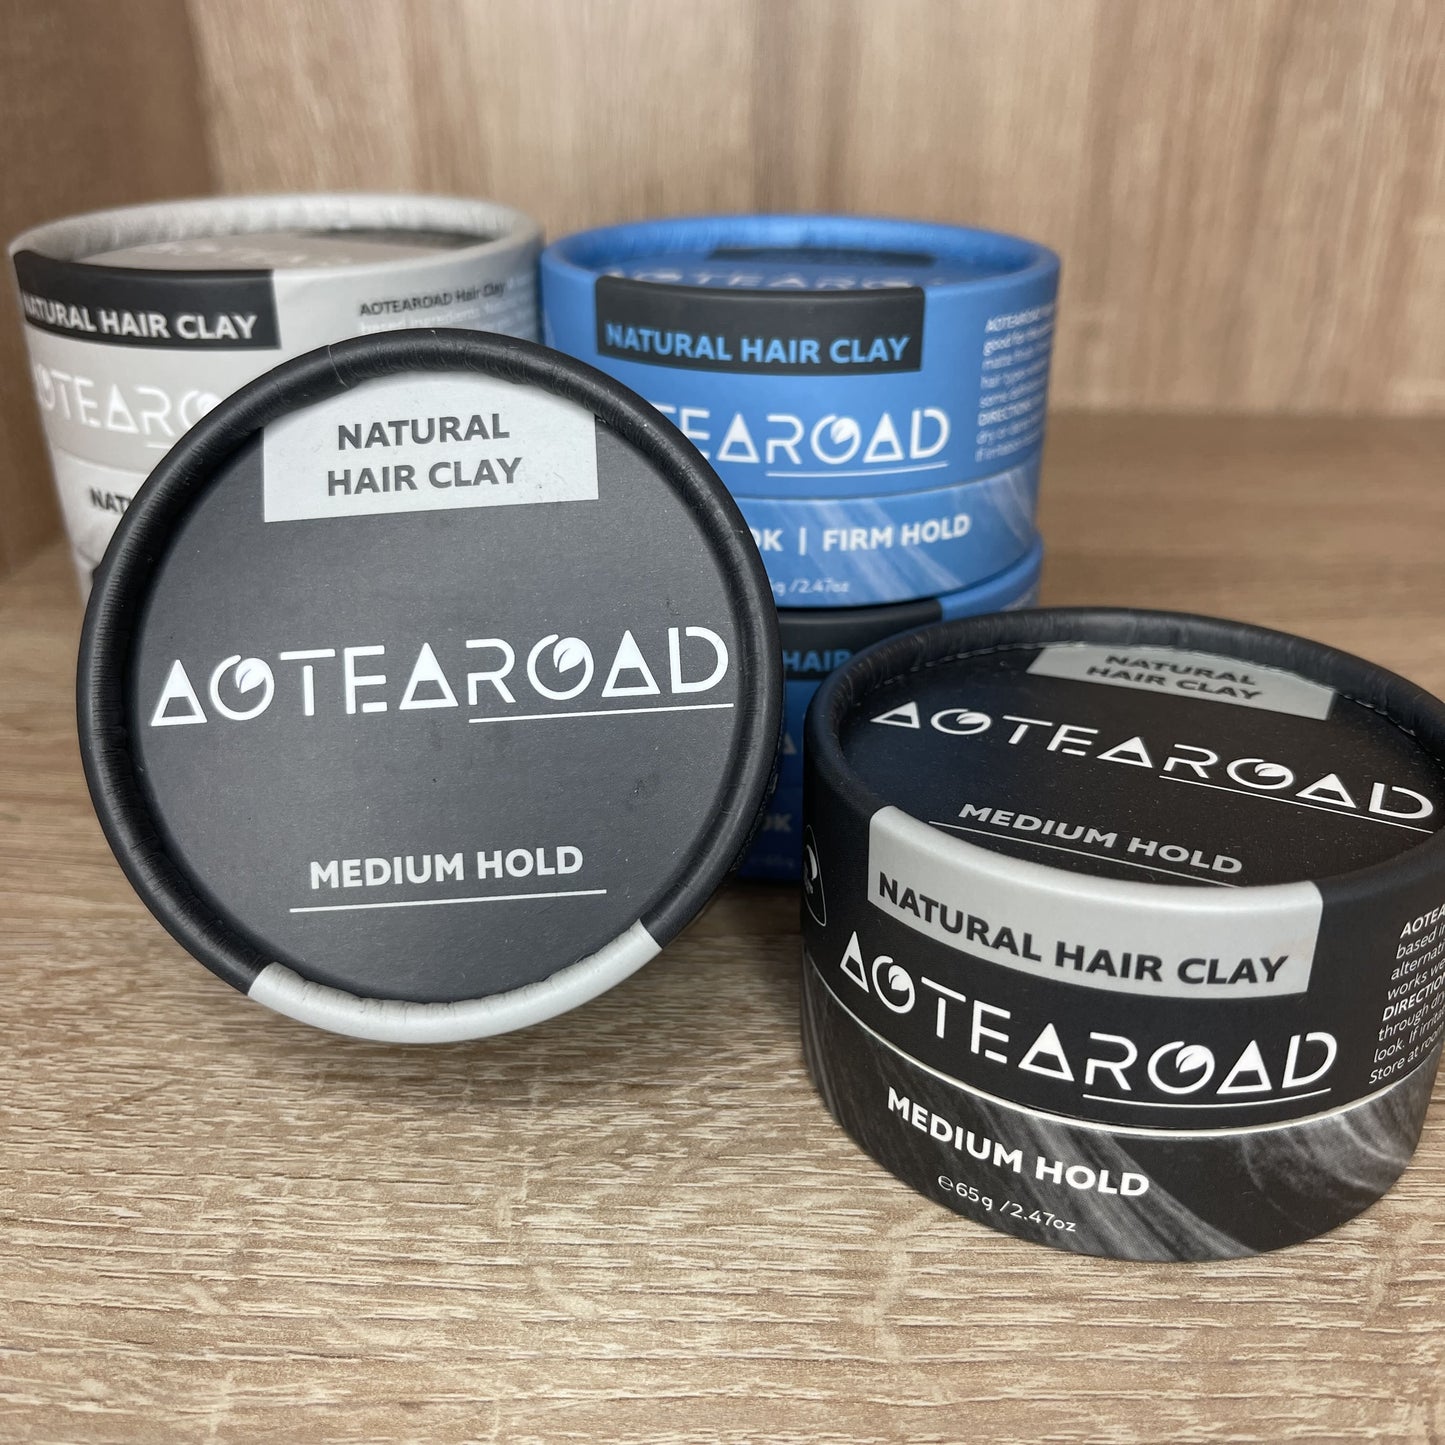 Medium hold hair clay from Aotearoad.